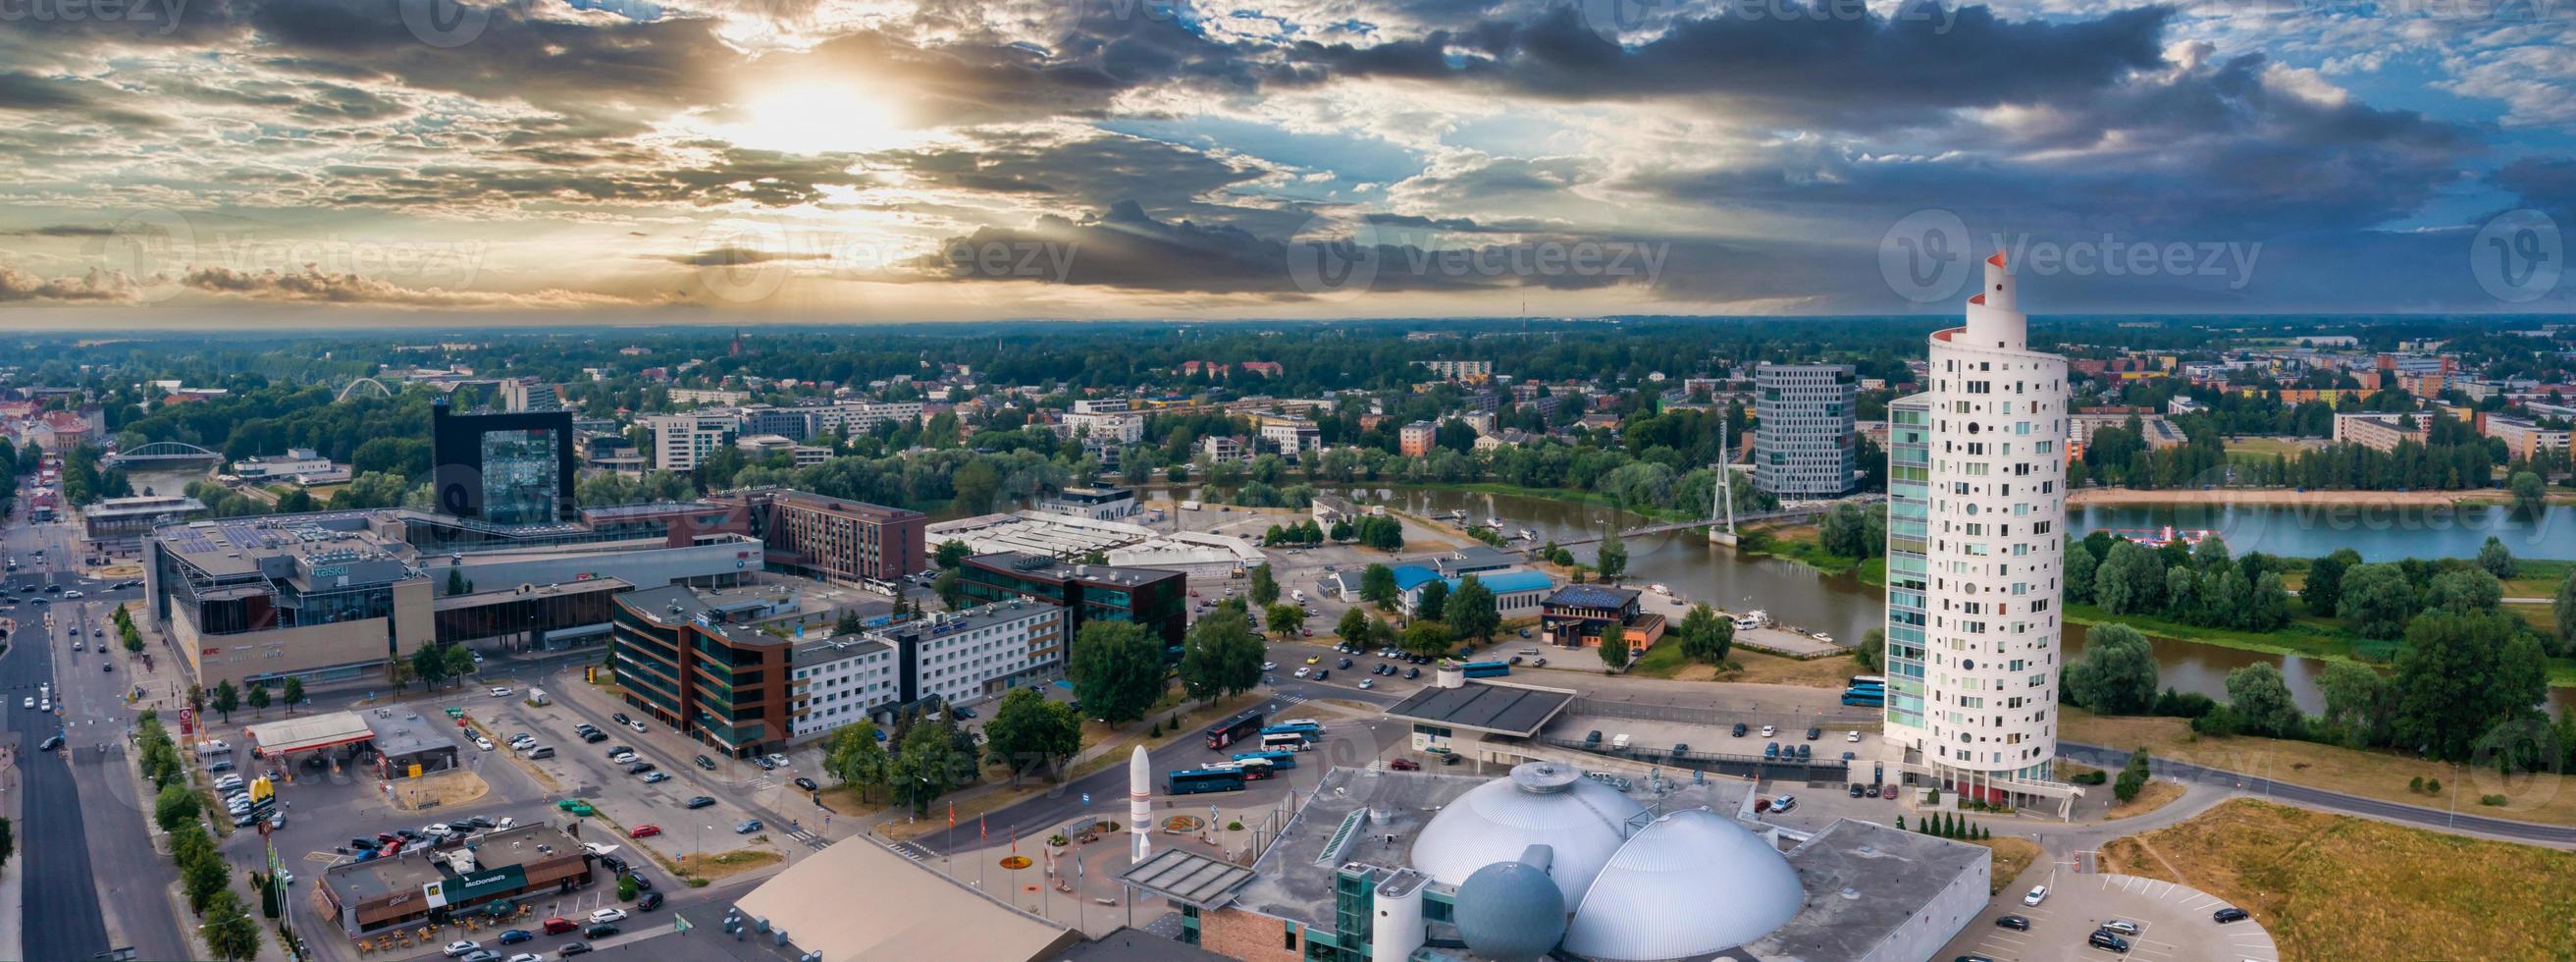 stadsbild av tartu stad i estland. foto